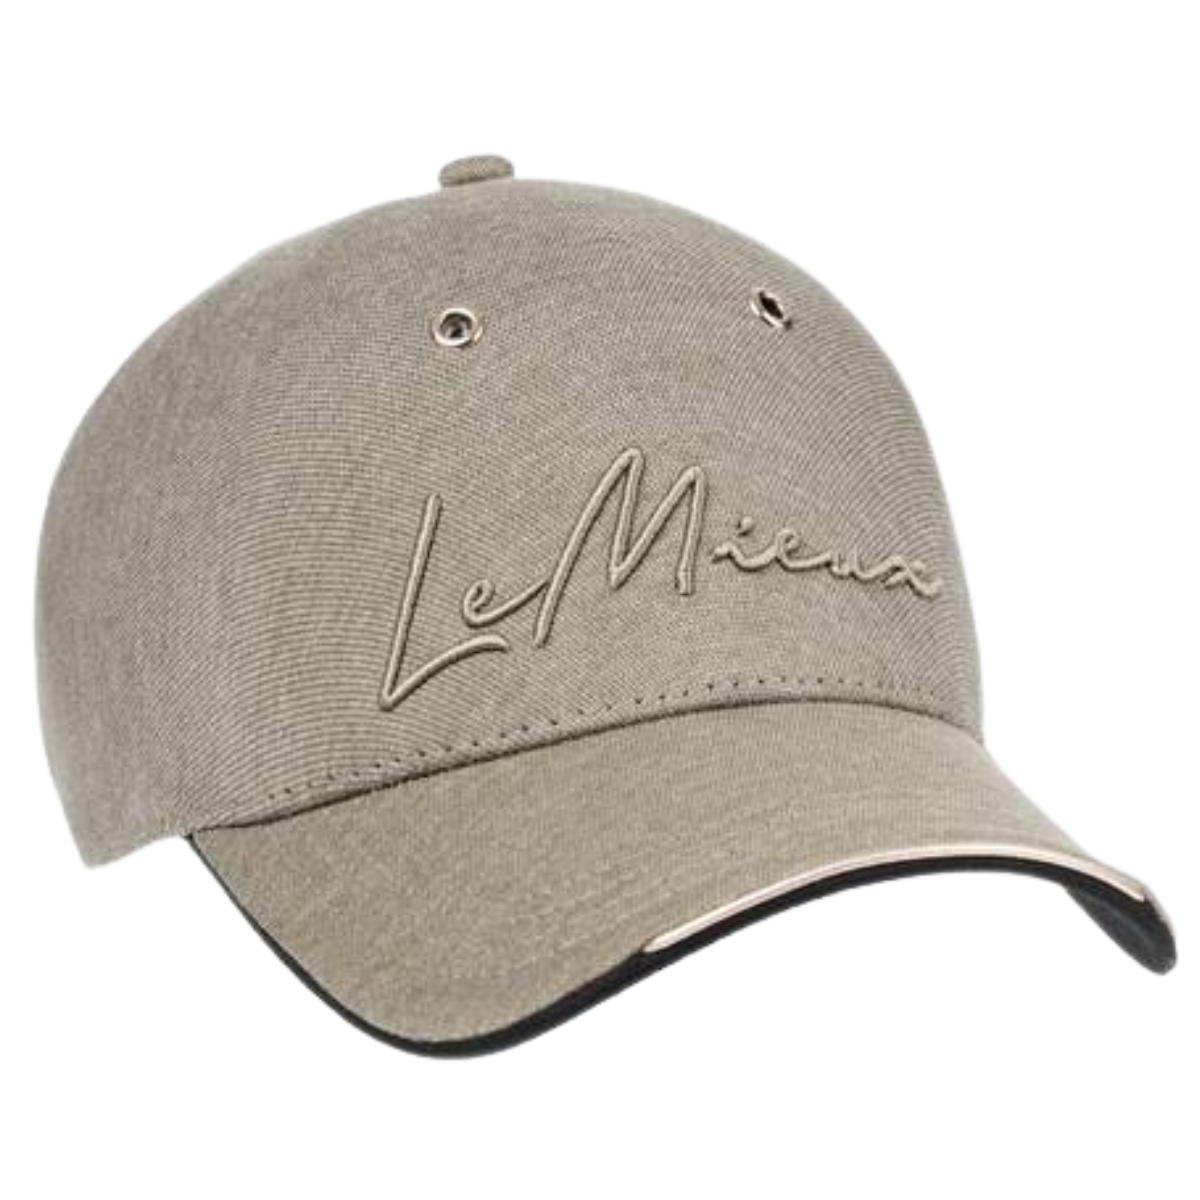 LeMieux 'Simone' Baseball Cap in Grey